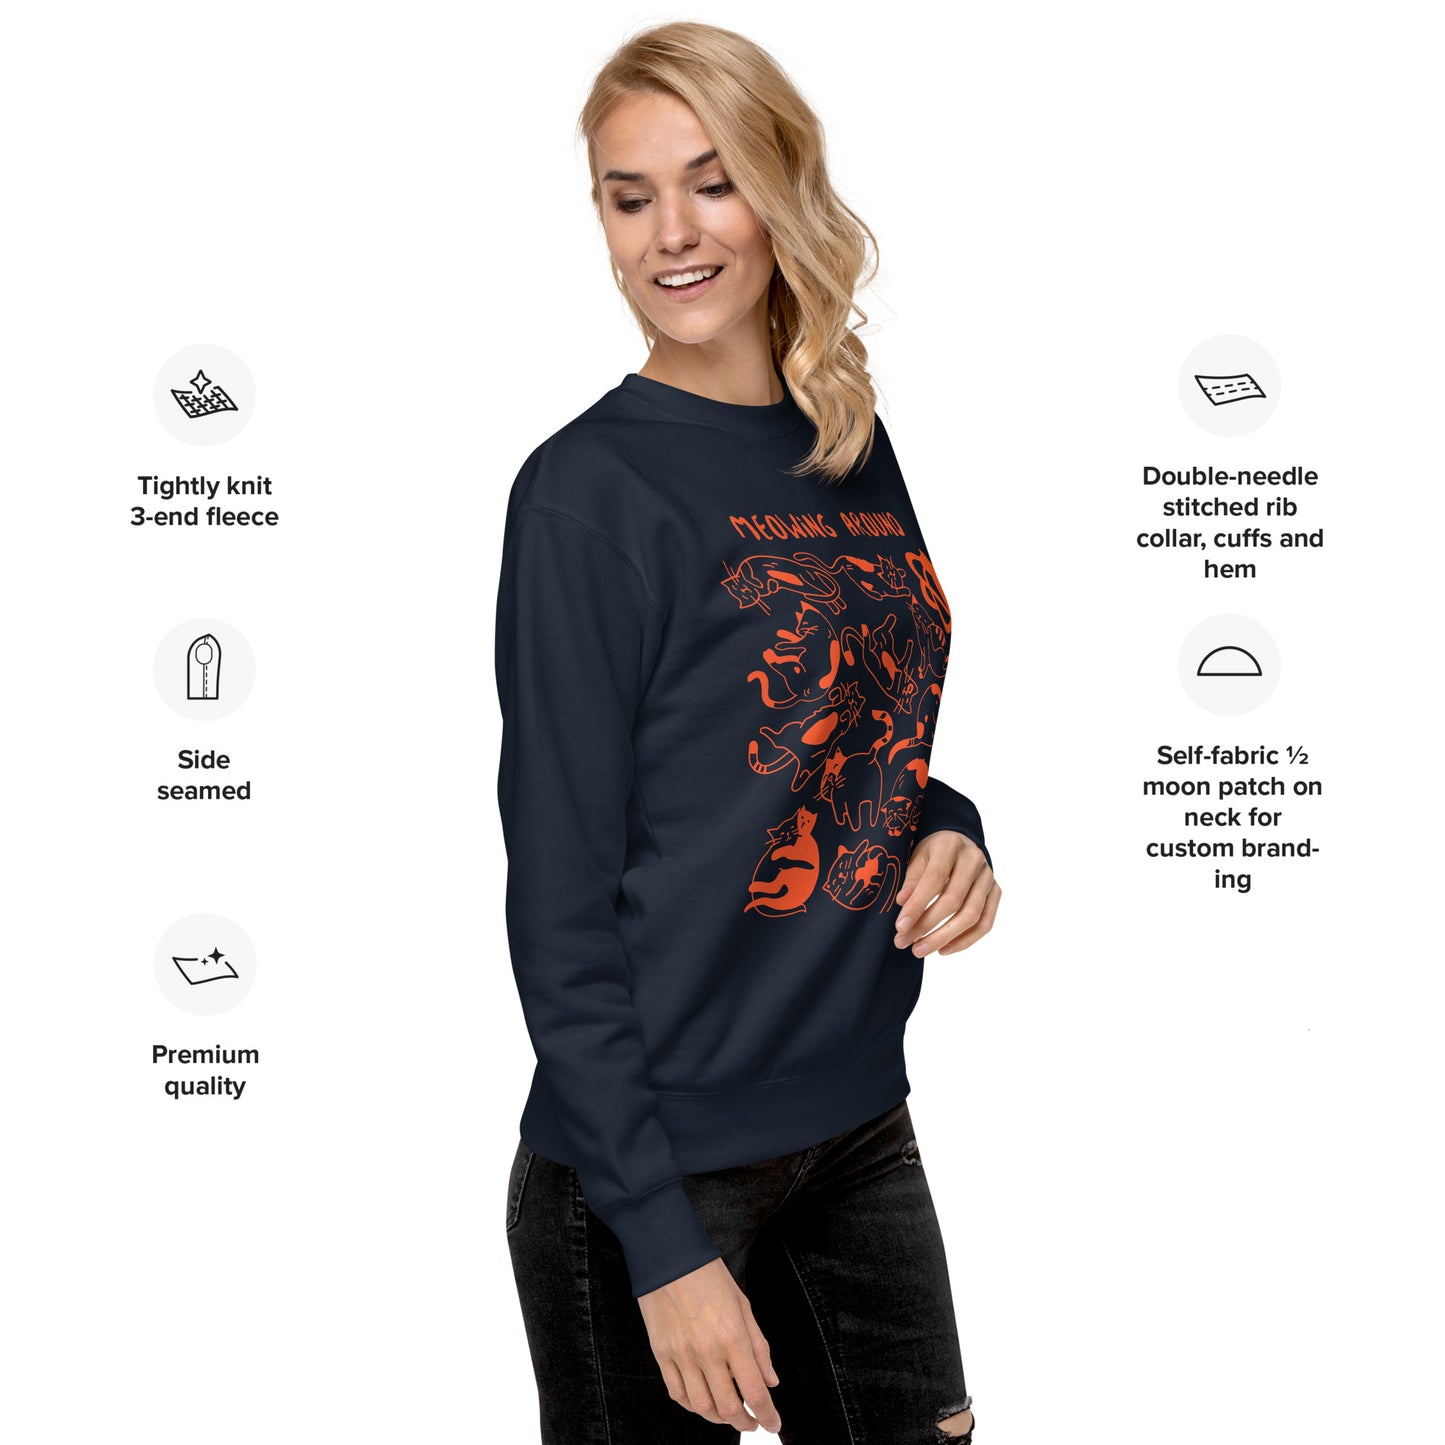 Meowing Around - Unisex Premium Sweatshirt